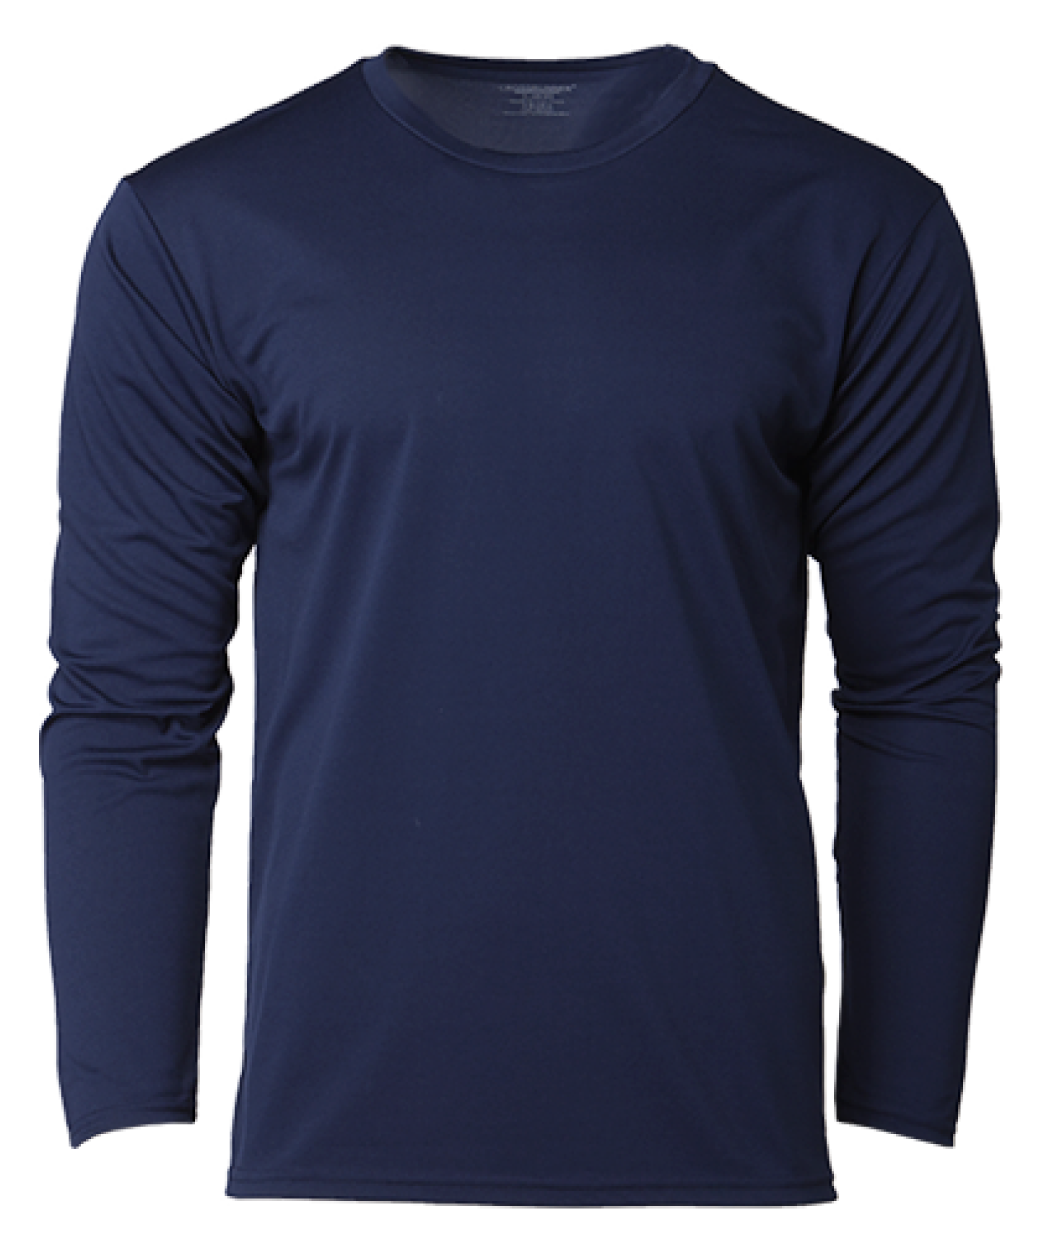 navy blue long sleeve dri fit shirt